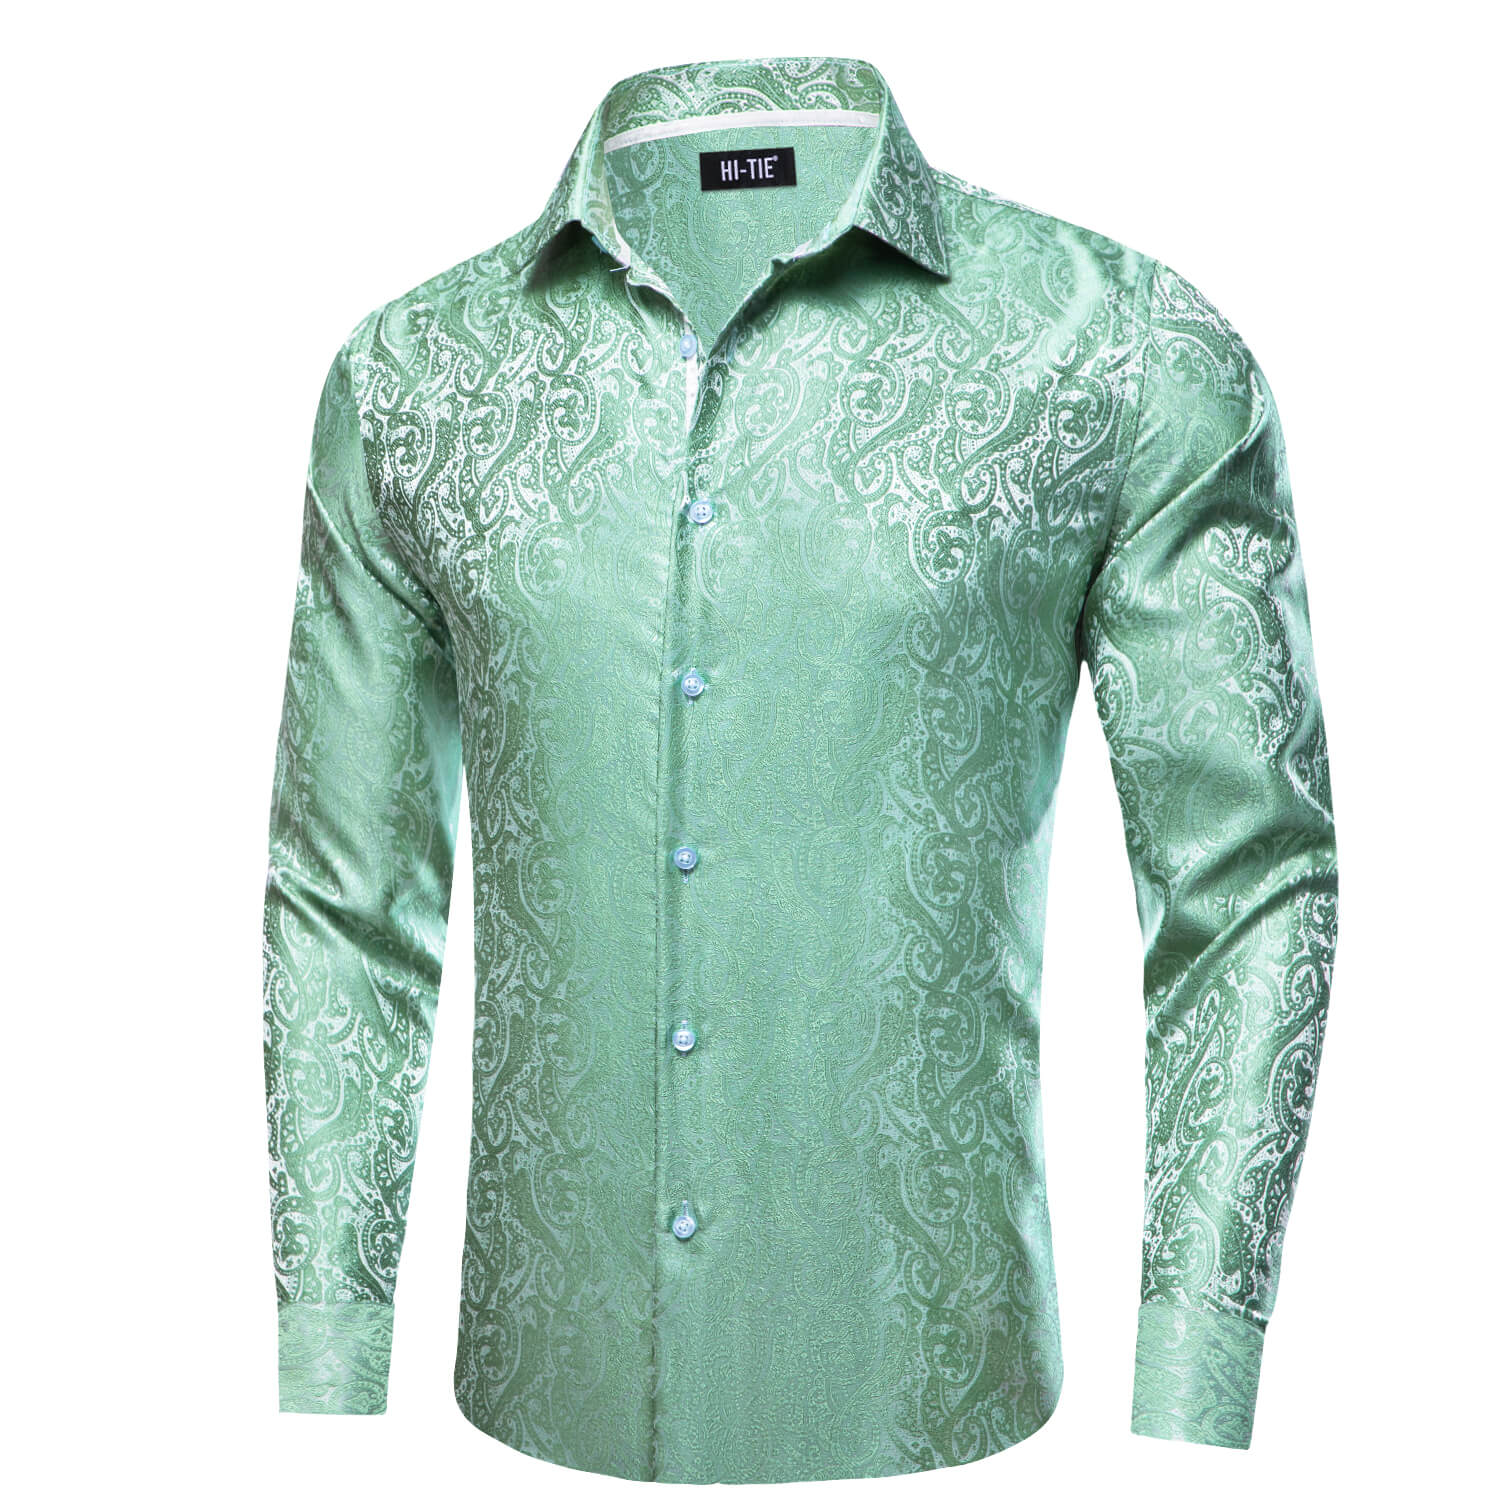 Hi-Tie Men's Button Down Shirt Mint Green Jacquard Floral Silk Shirt